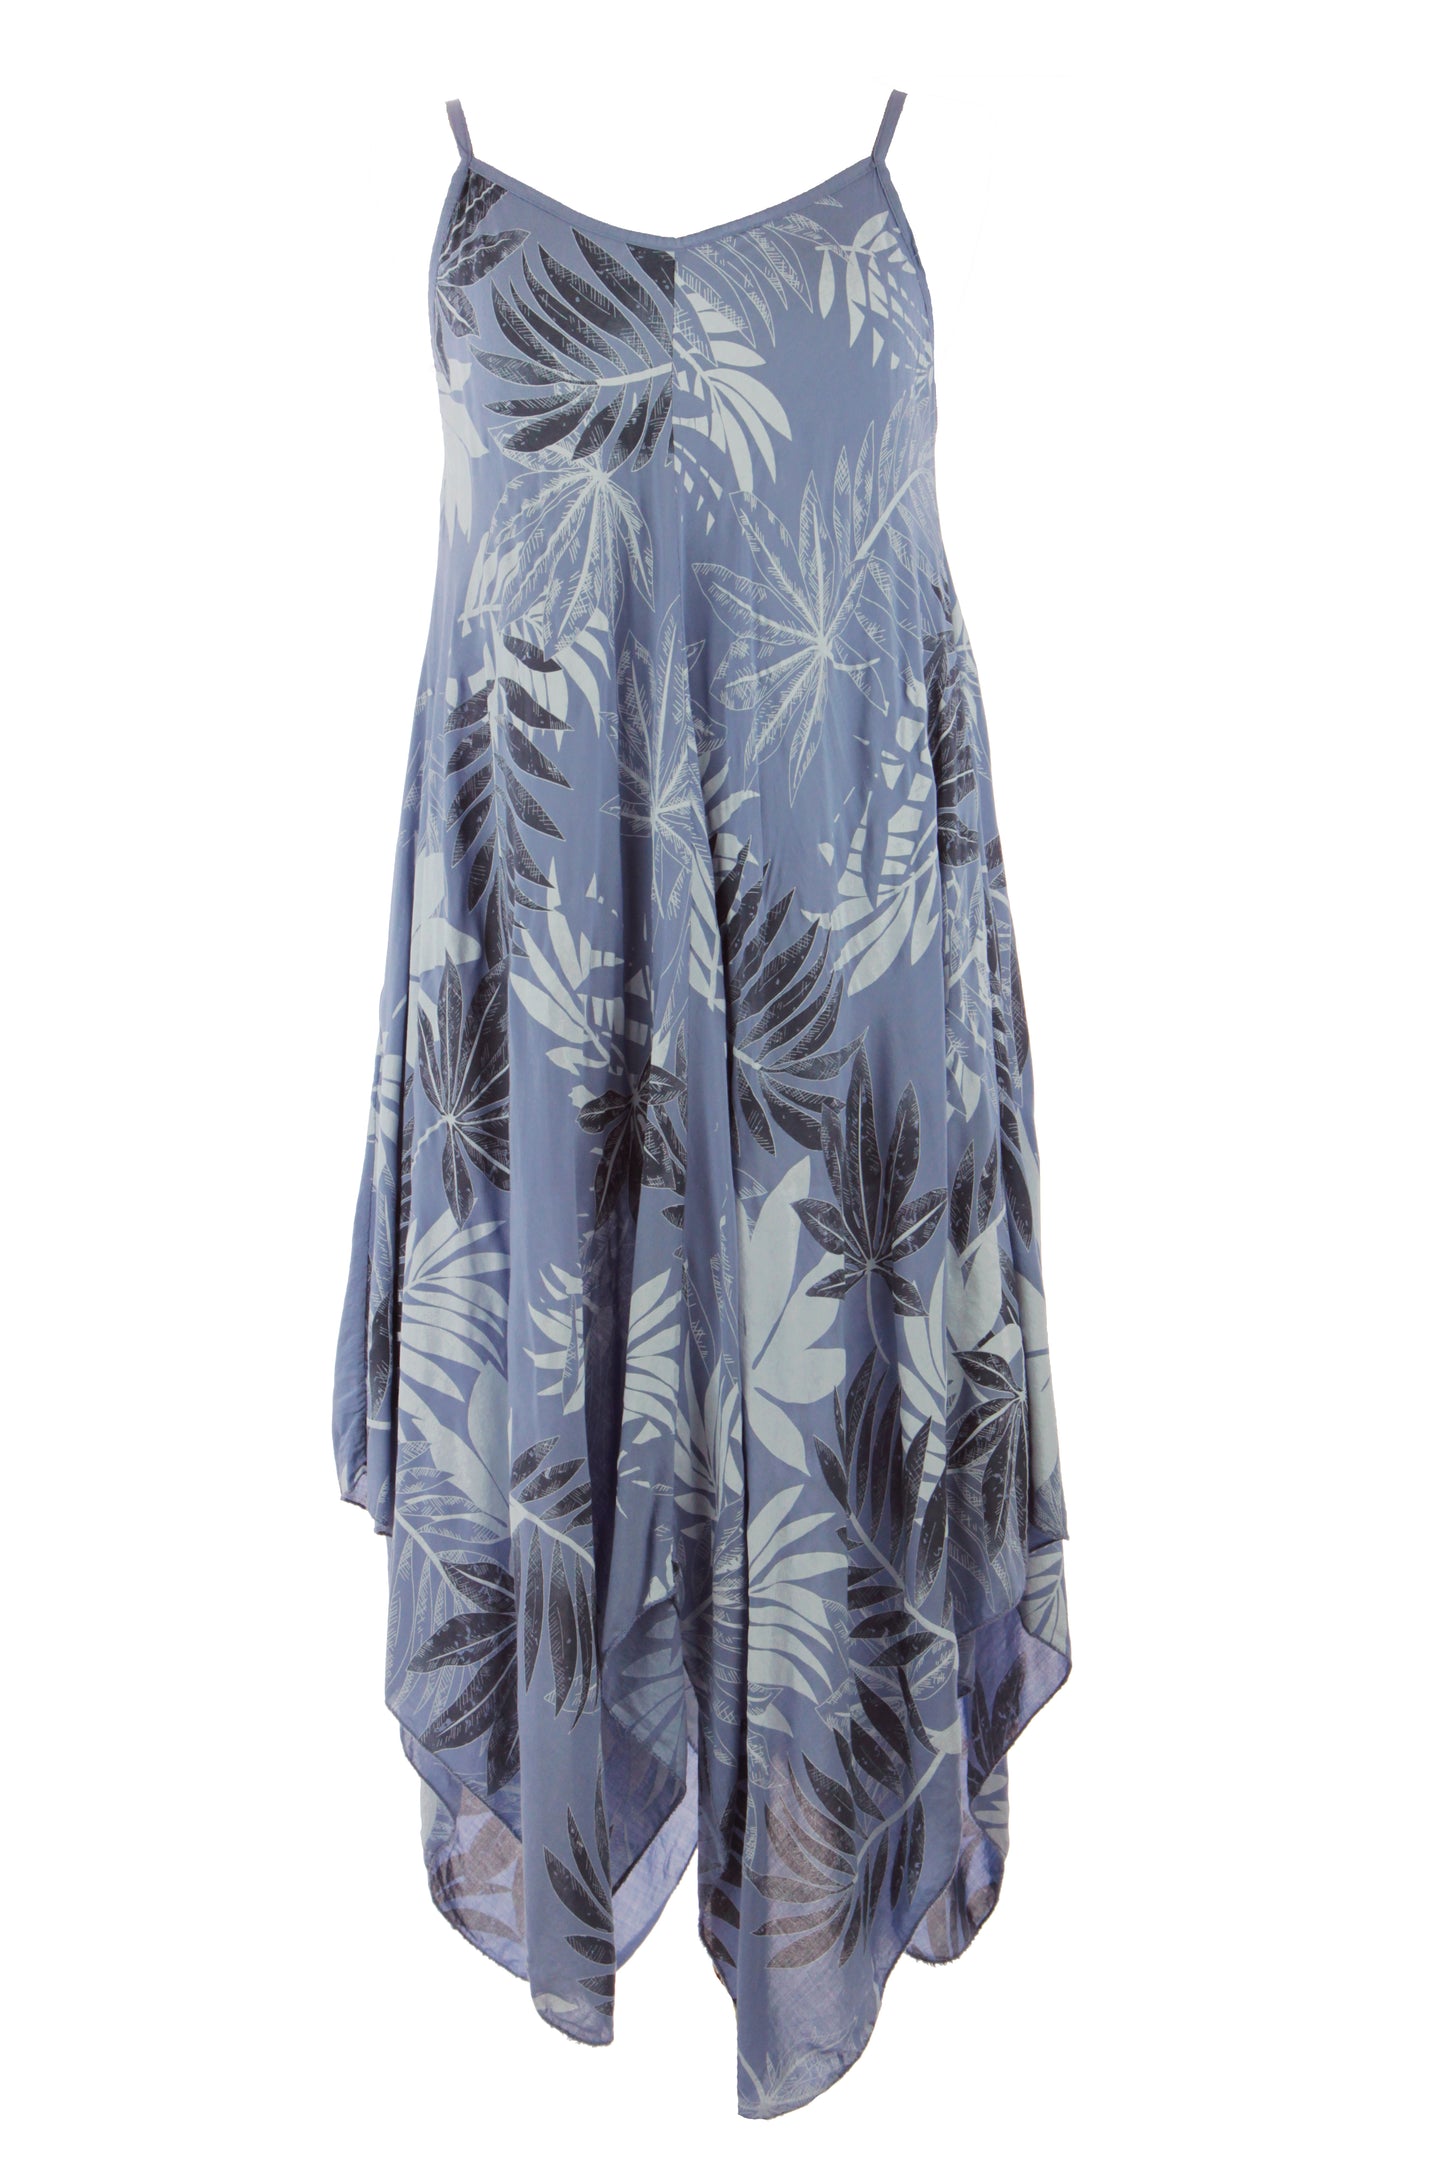 Palm Print Hanky Dress